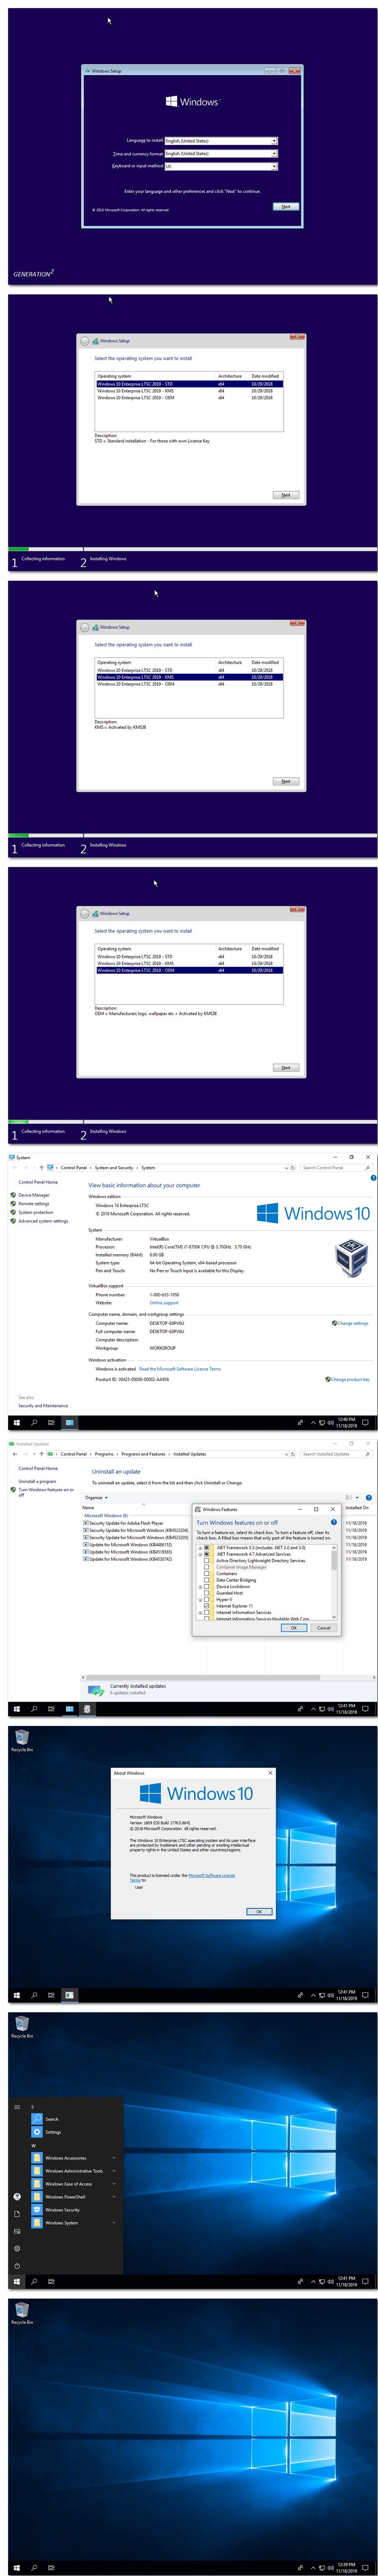 windows 10 enterprise ltsc 2019 64 bit iso download